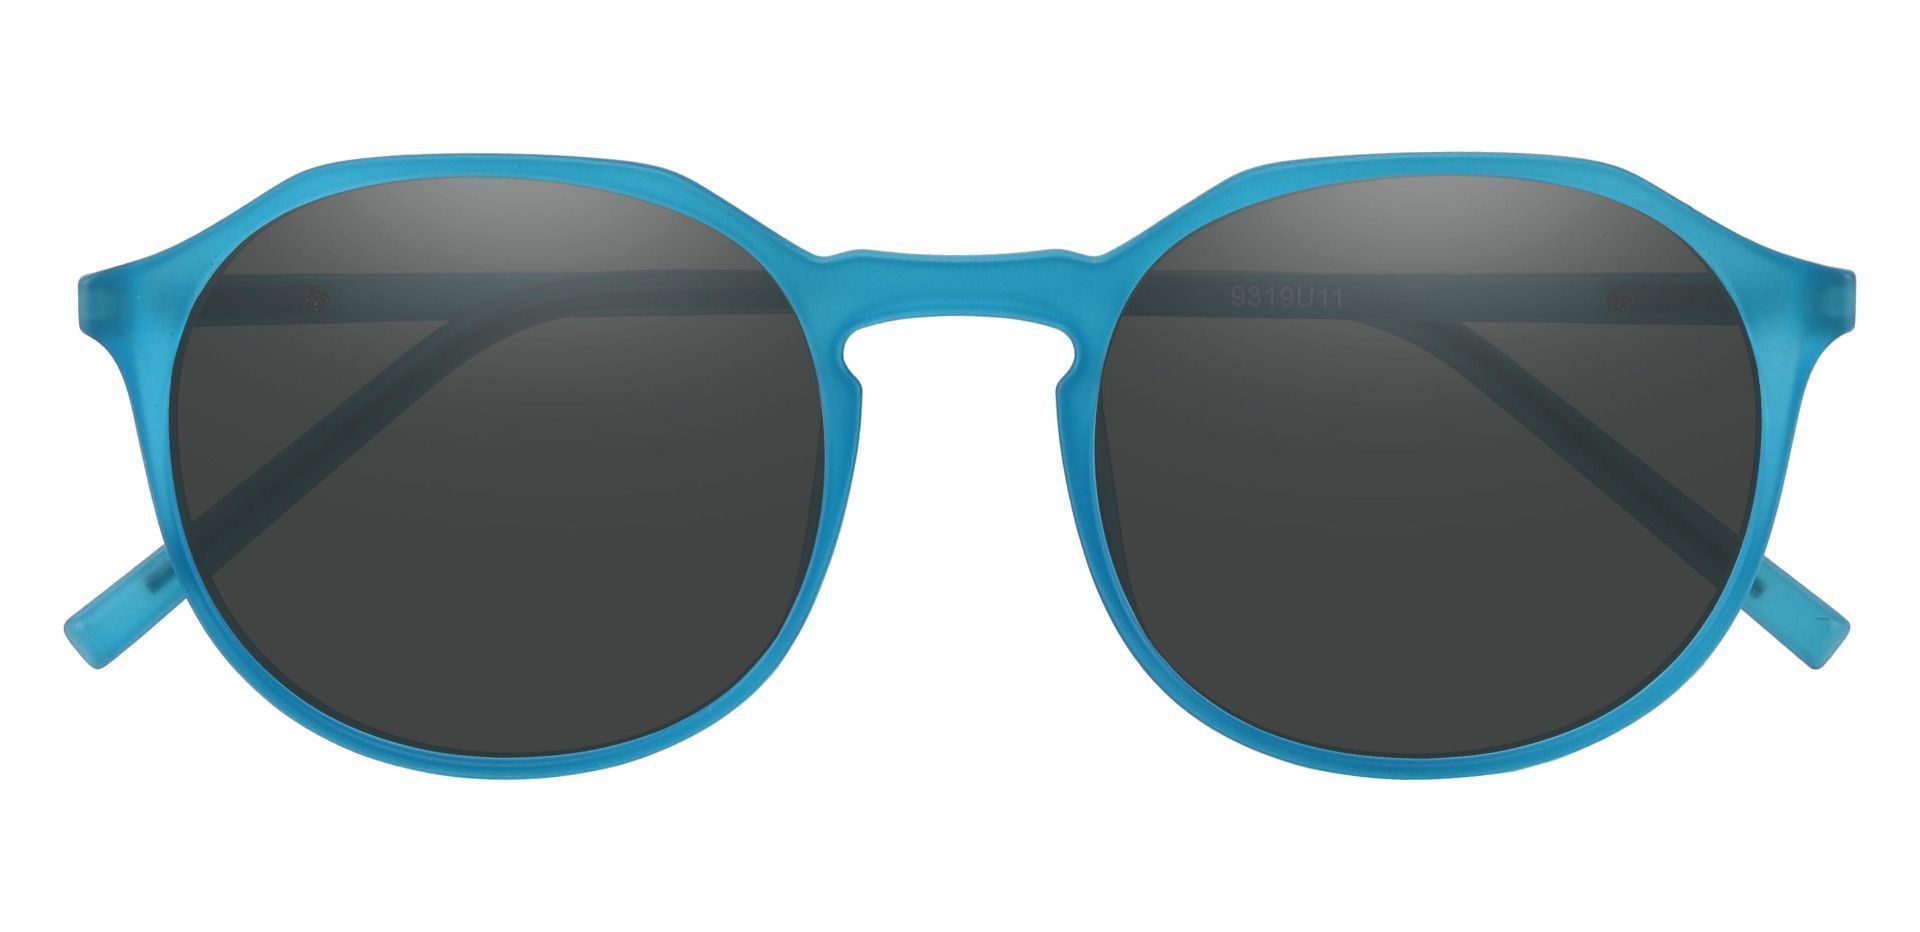 Belvidere Geometric Reading Sunglasses - Blue Frame With Gray Lenses